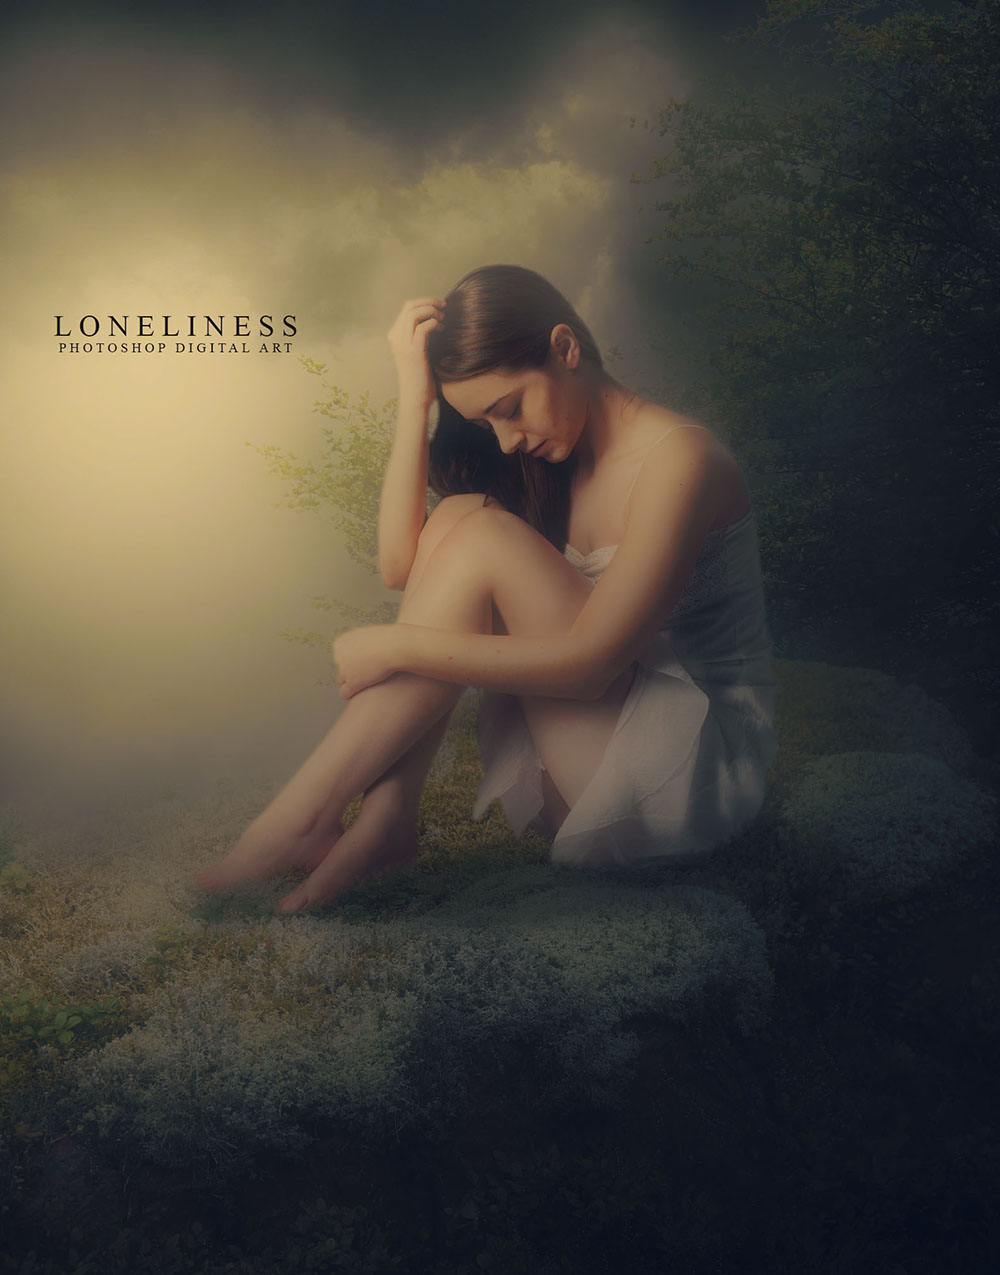 Loneliness - Fantasy Photo Manipulation Photoshop Tutorial